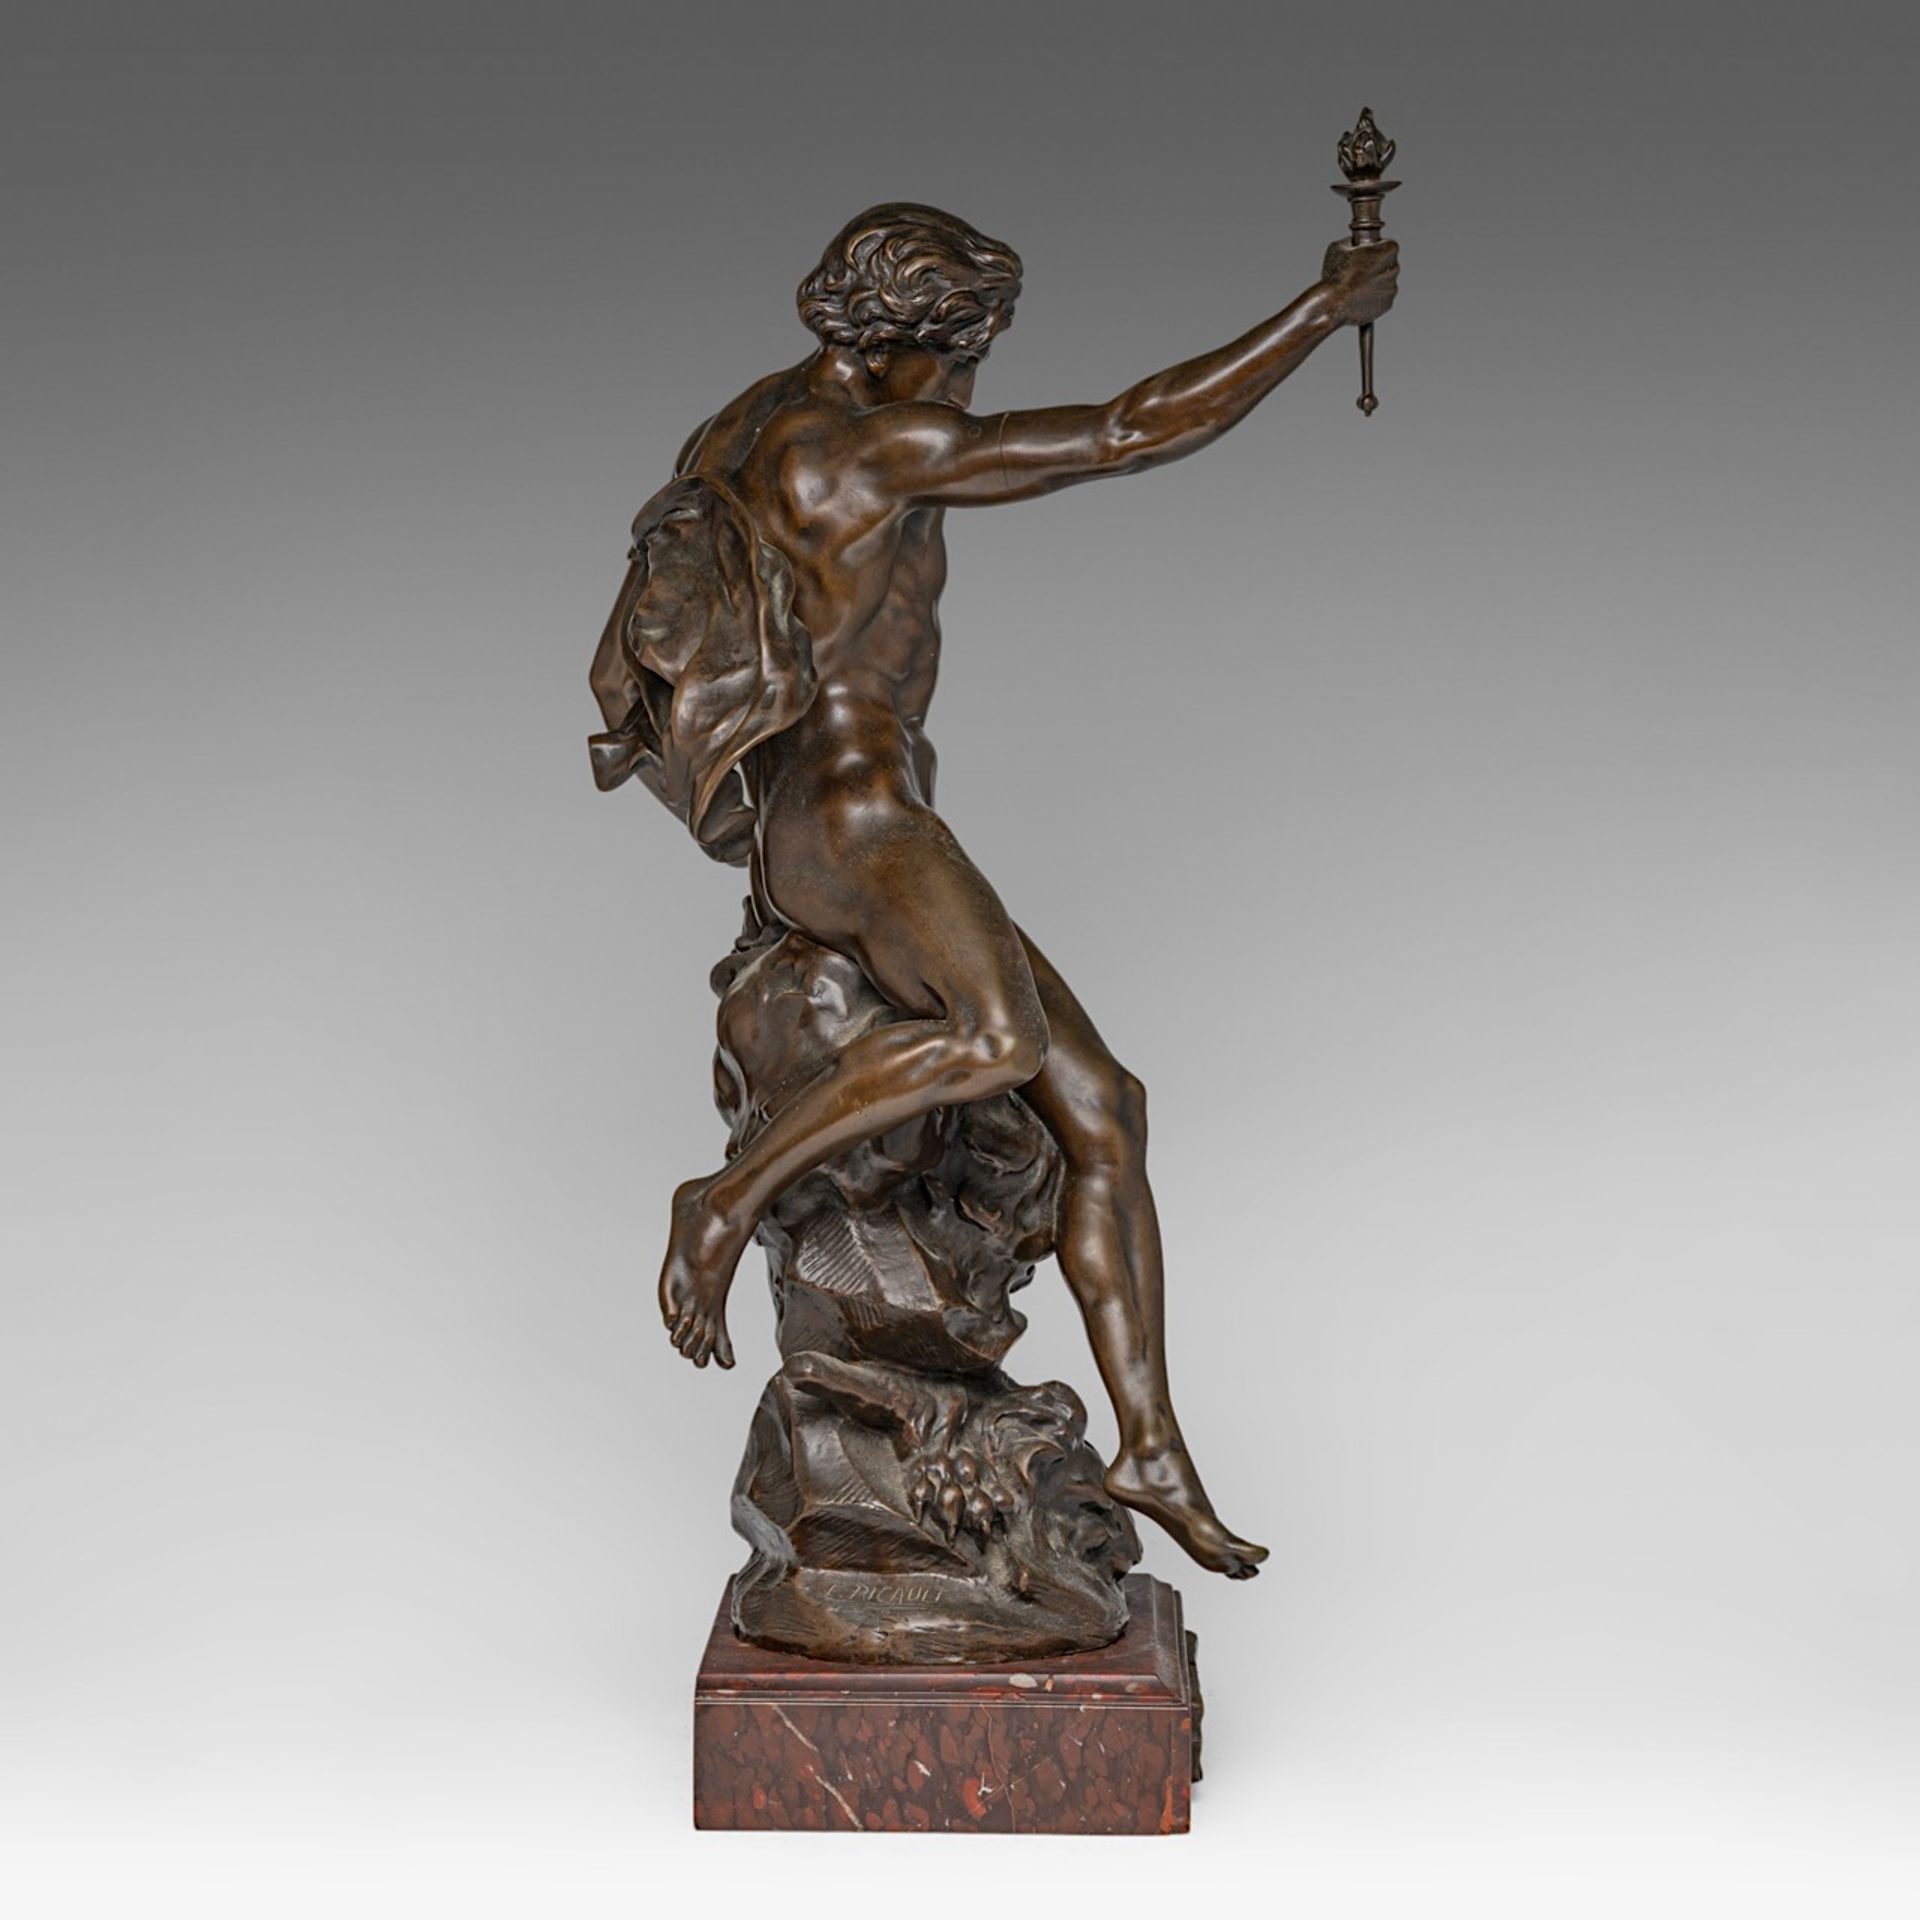 Emile Louis Picault (1833-1915), 'Excelsior', patinated bronze, H 61 cm - Image 5 of 8